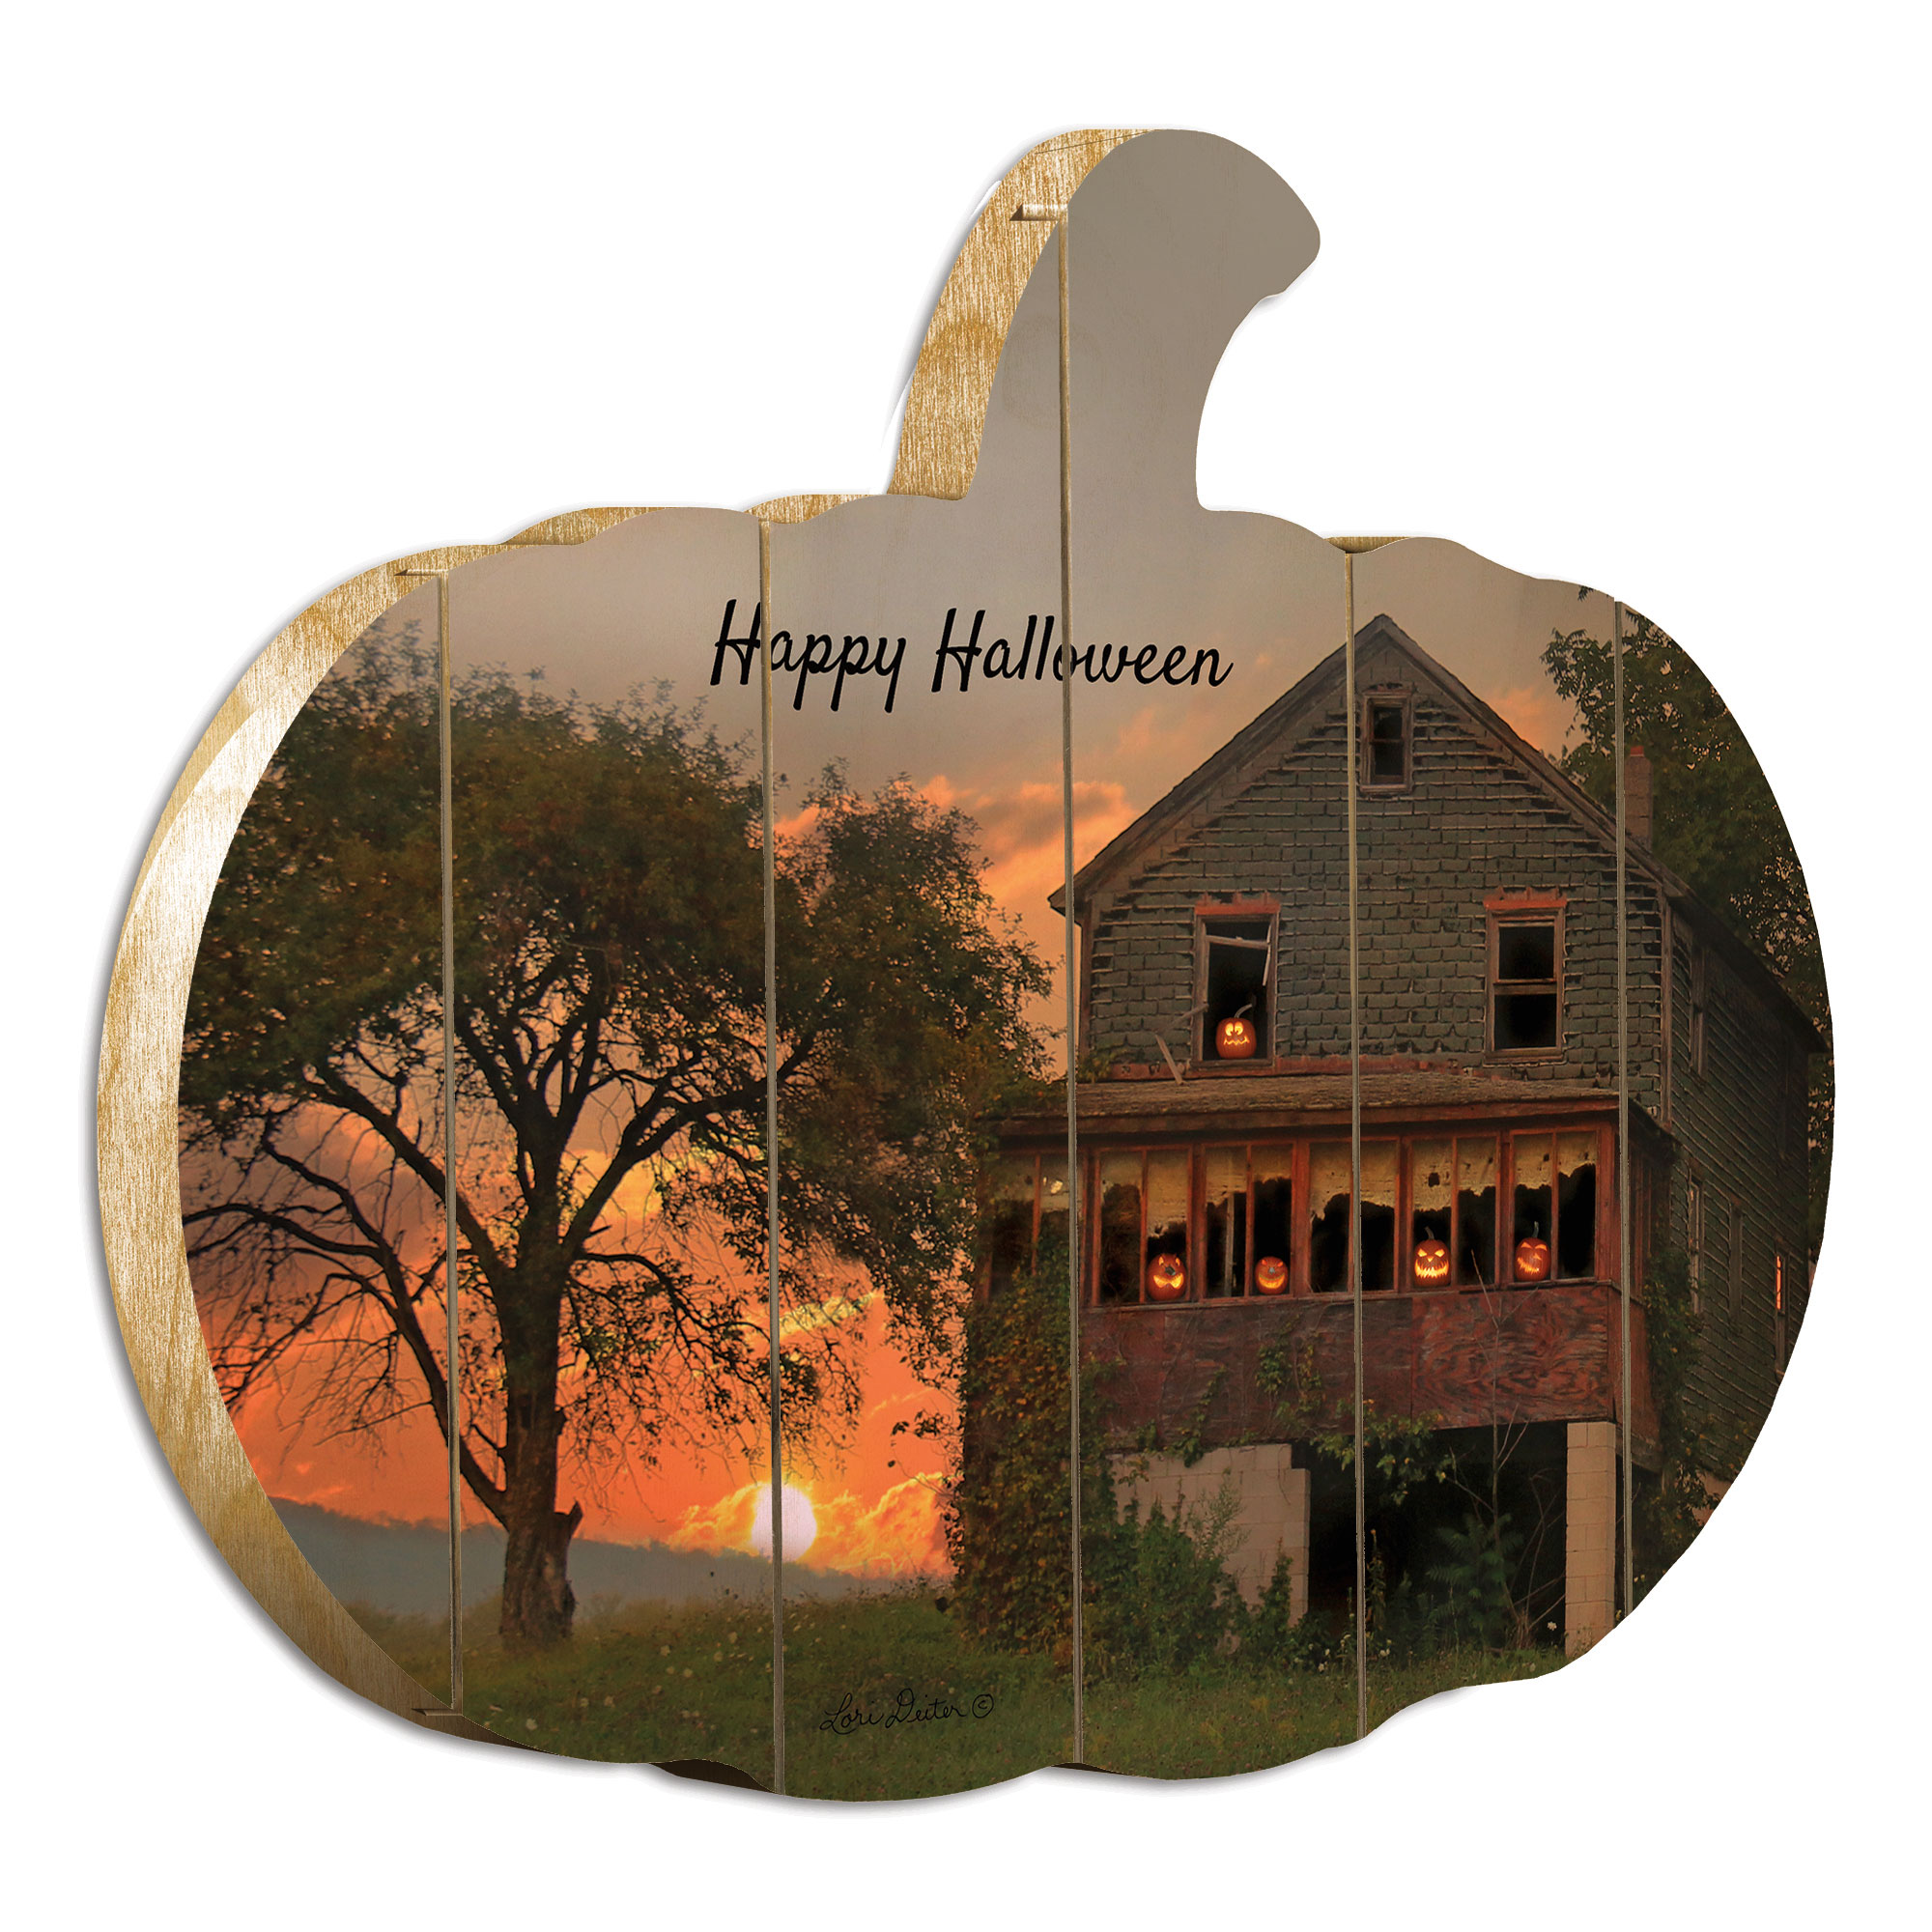 "Happy Halloween" By Artisan Lori Deiter Printed on Wooden Pumpkin Wall Art